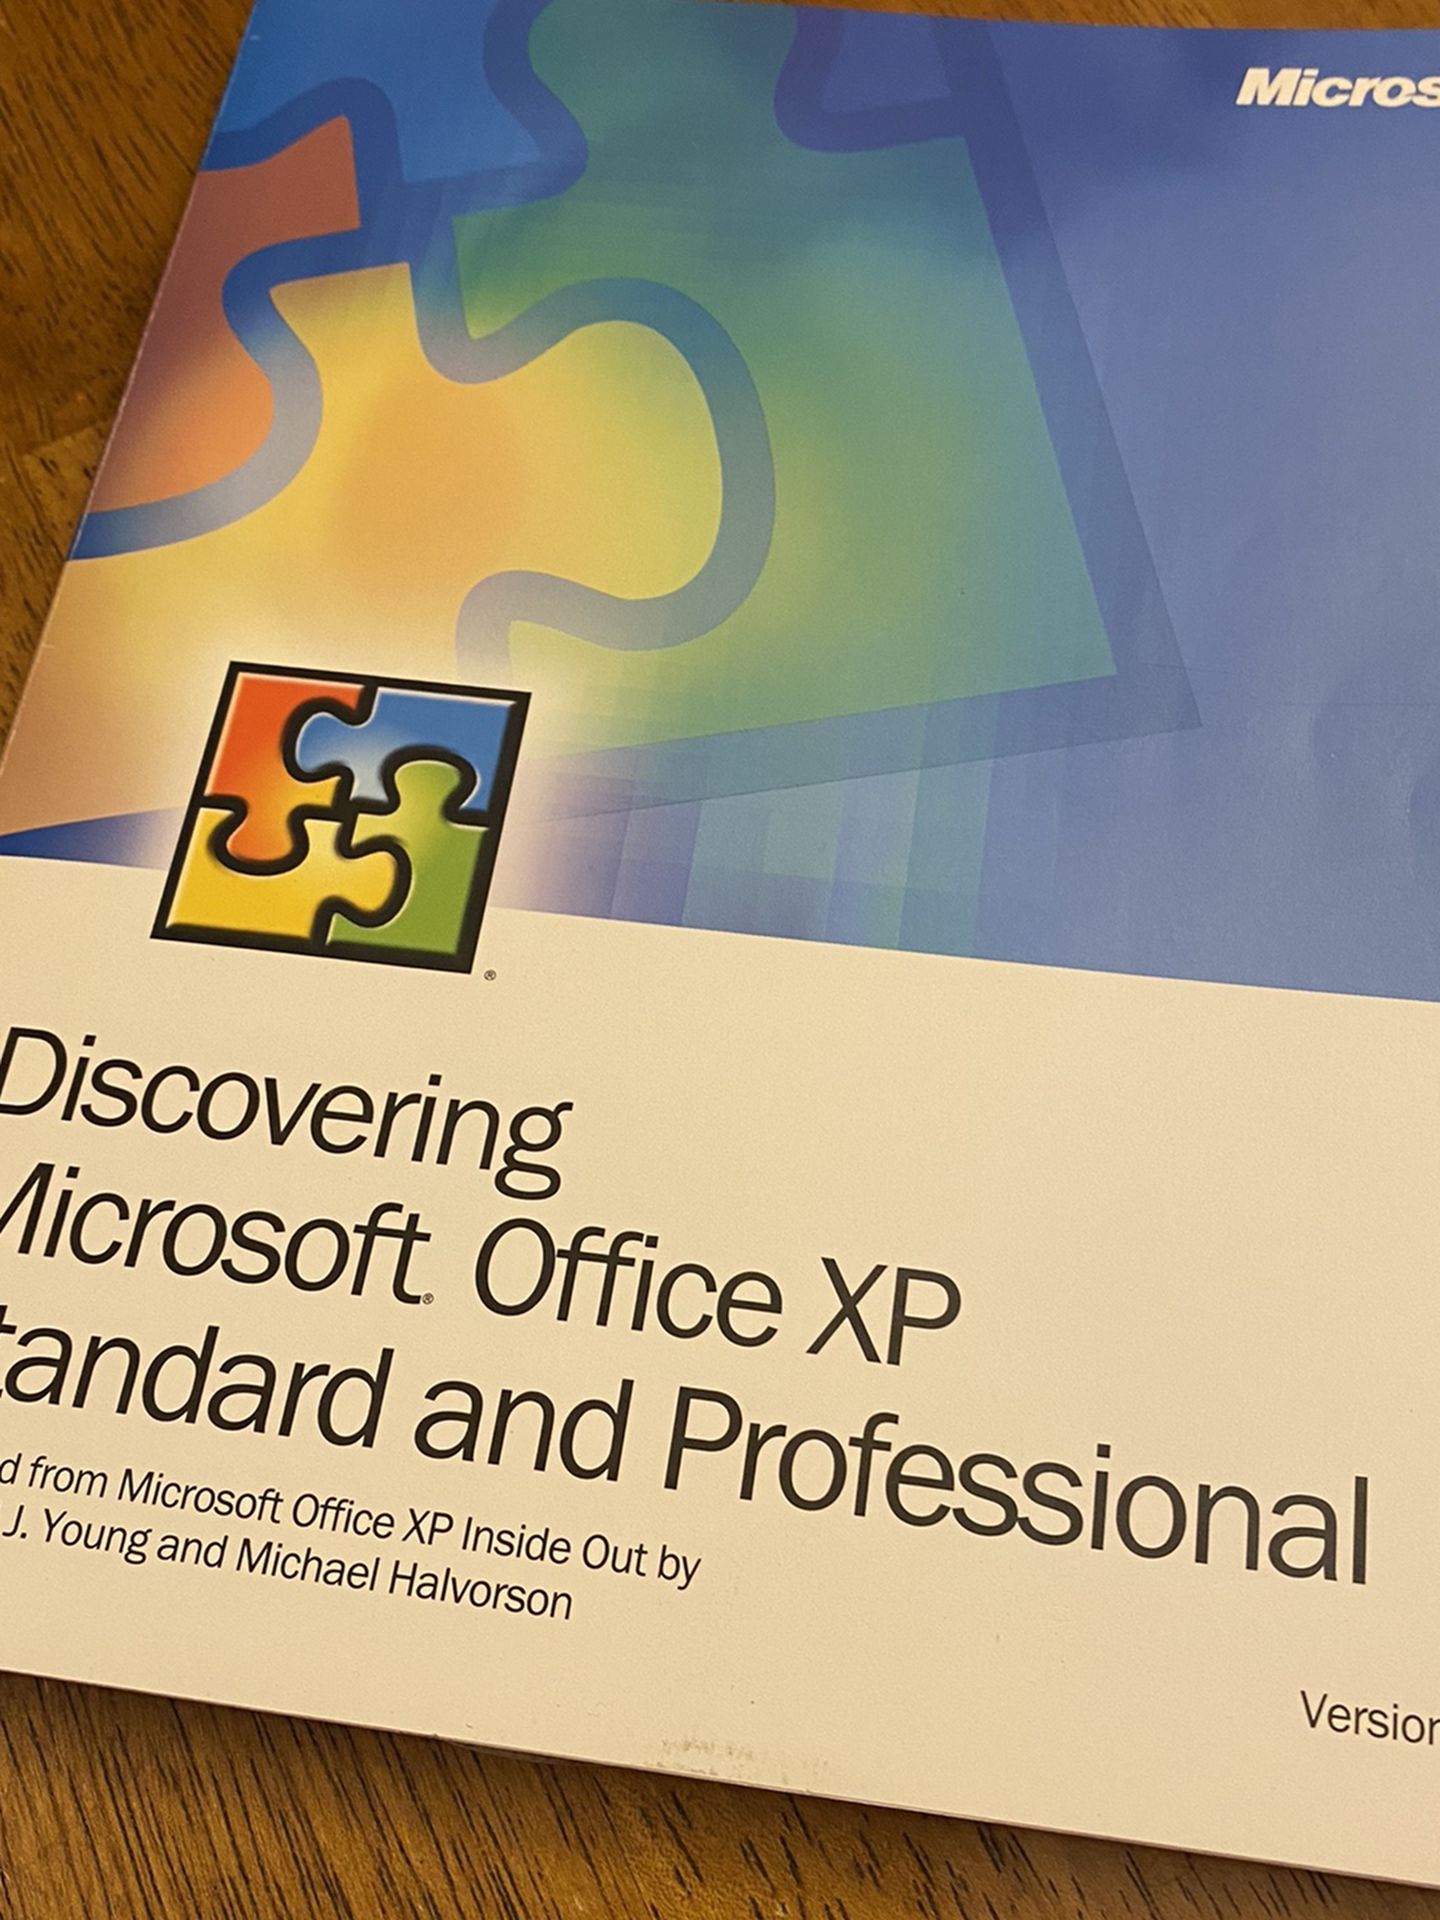 Microsoft Office XP Standard & Professional